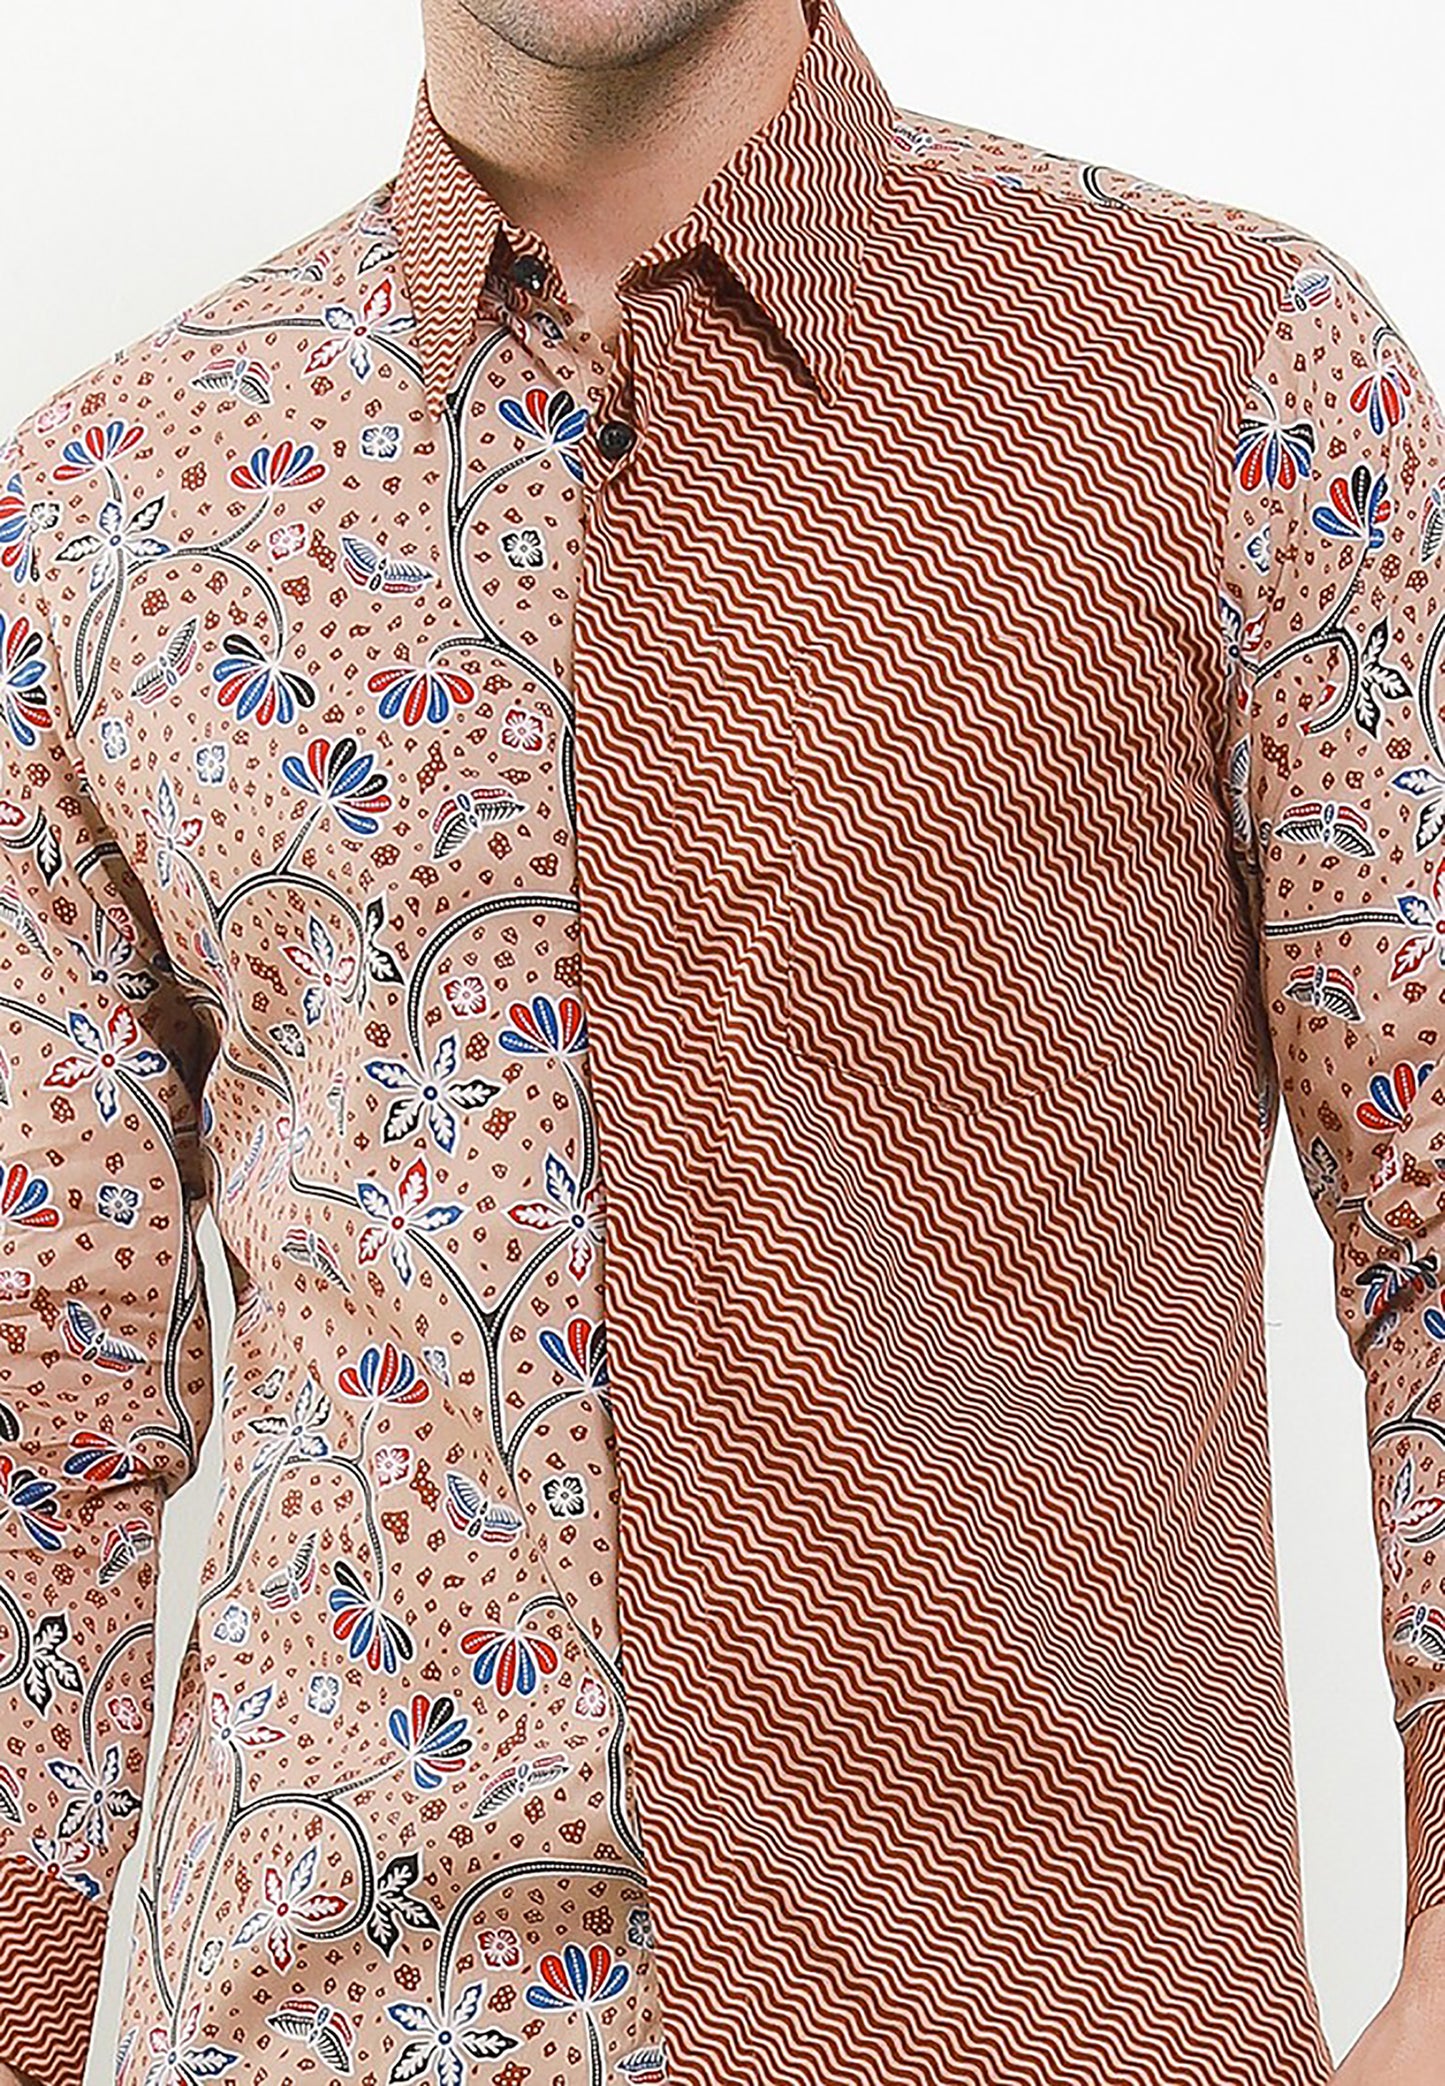 Arjuna Splendor Men's Batik Shirt with Majestic Bang Biron Pattern, Men Batik, Batik, Men Batik Shirt, Men's Batik Shirts